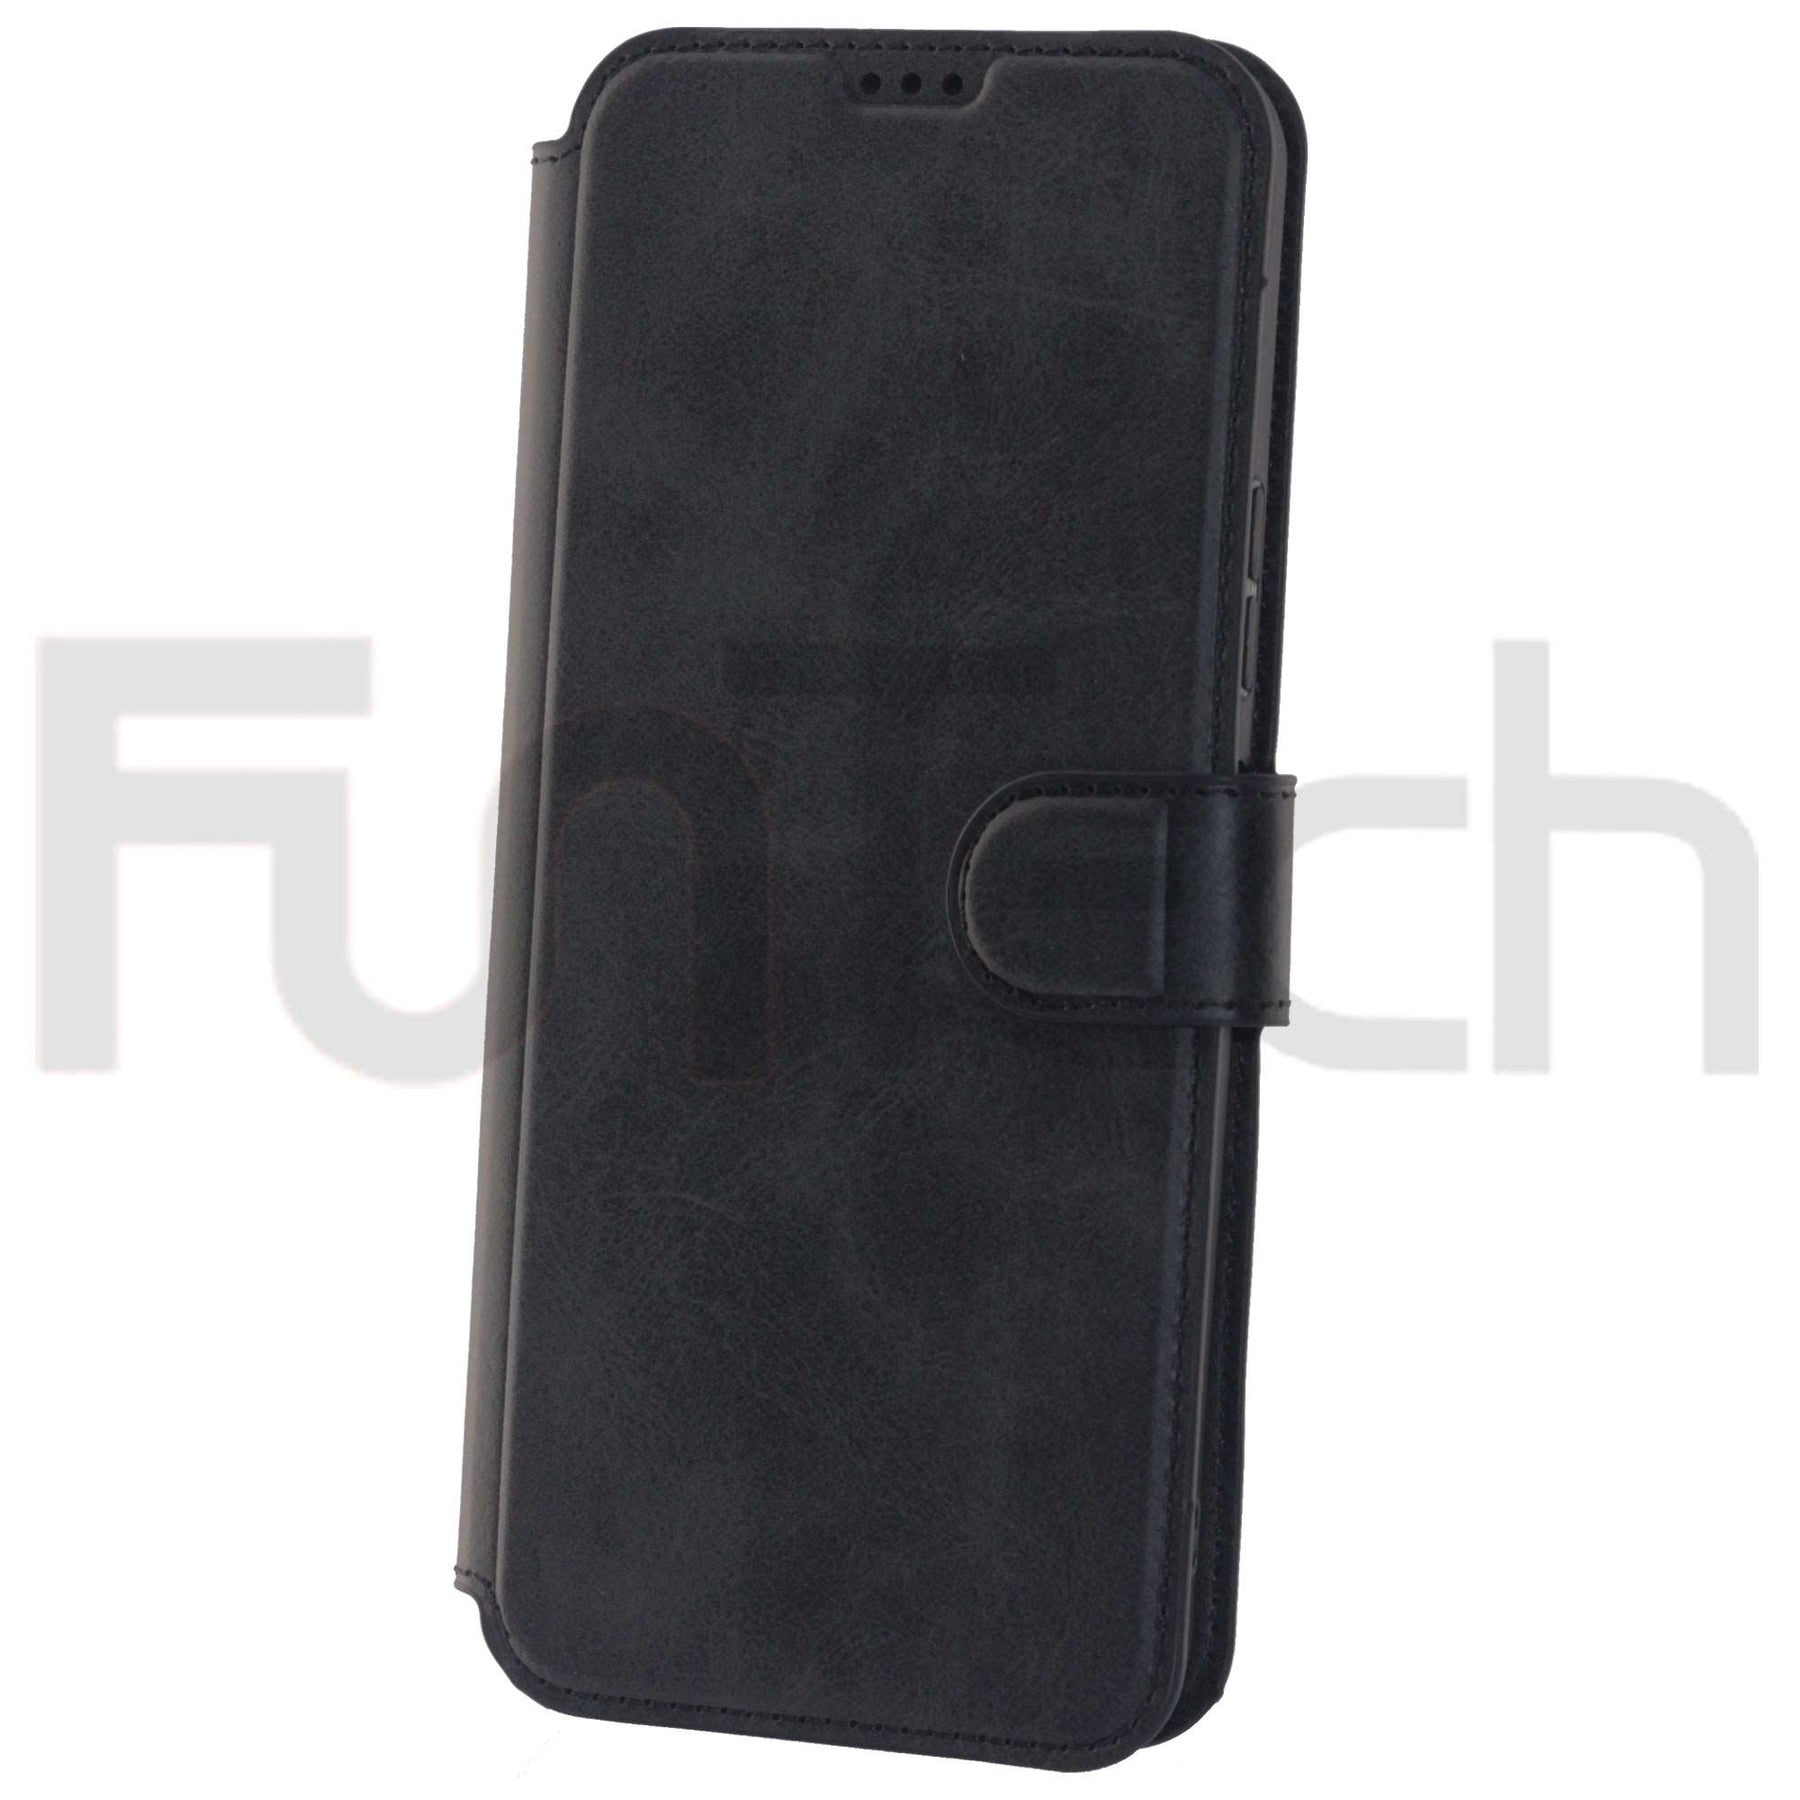 Nokia G50, Leather Wallet Case, Color Black.